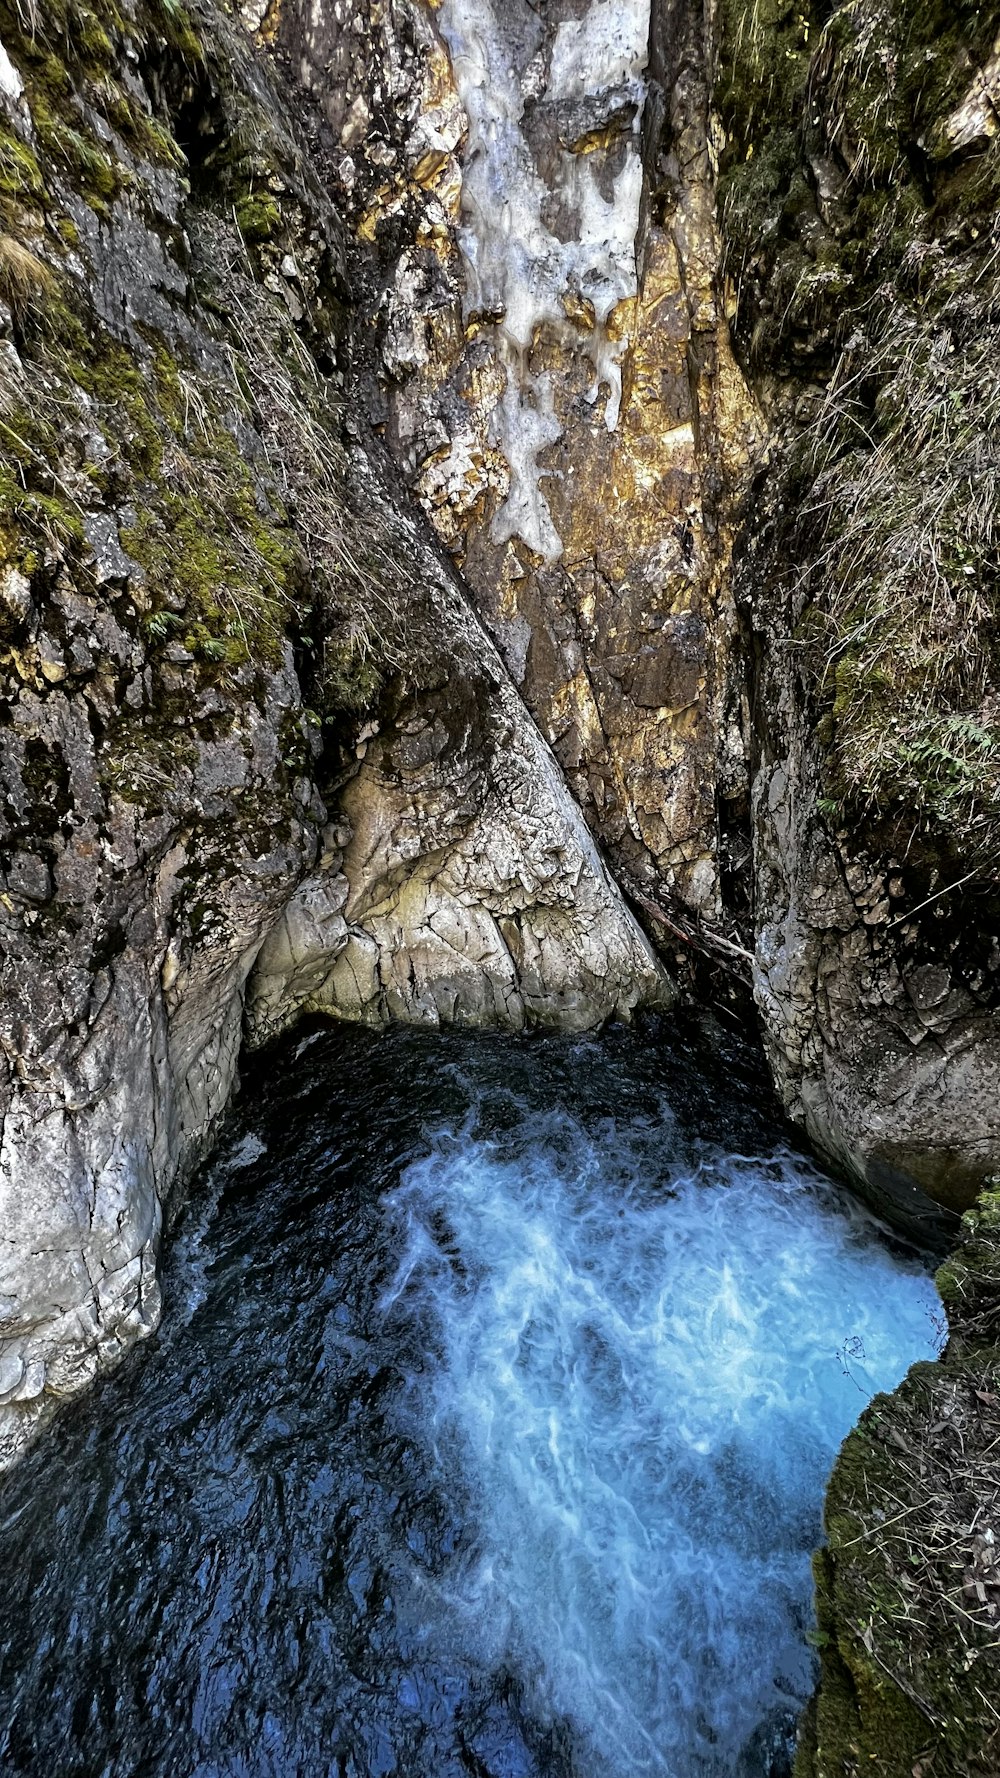 Ein Wasserfall an einem felsigen Ort